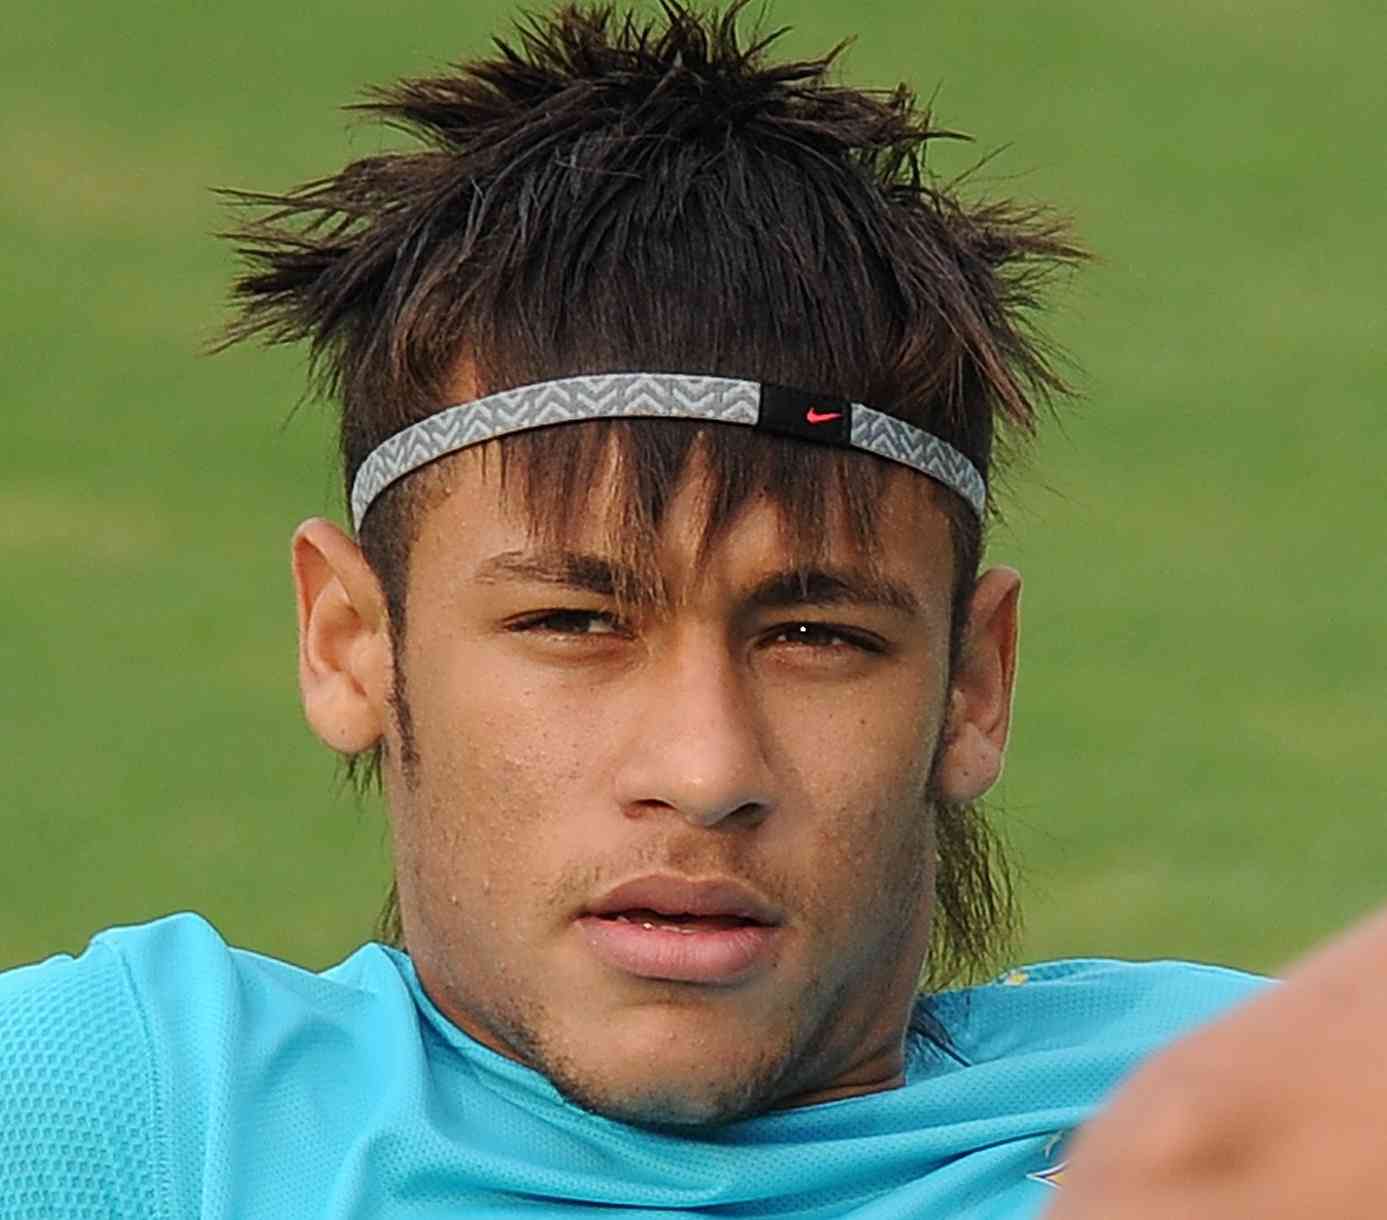 Beautiful Look Neymar Football Soccer Player Hd Free Mobile Desktop Bakground Download Wallpaper Images